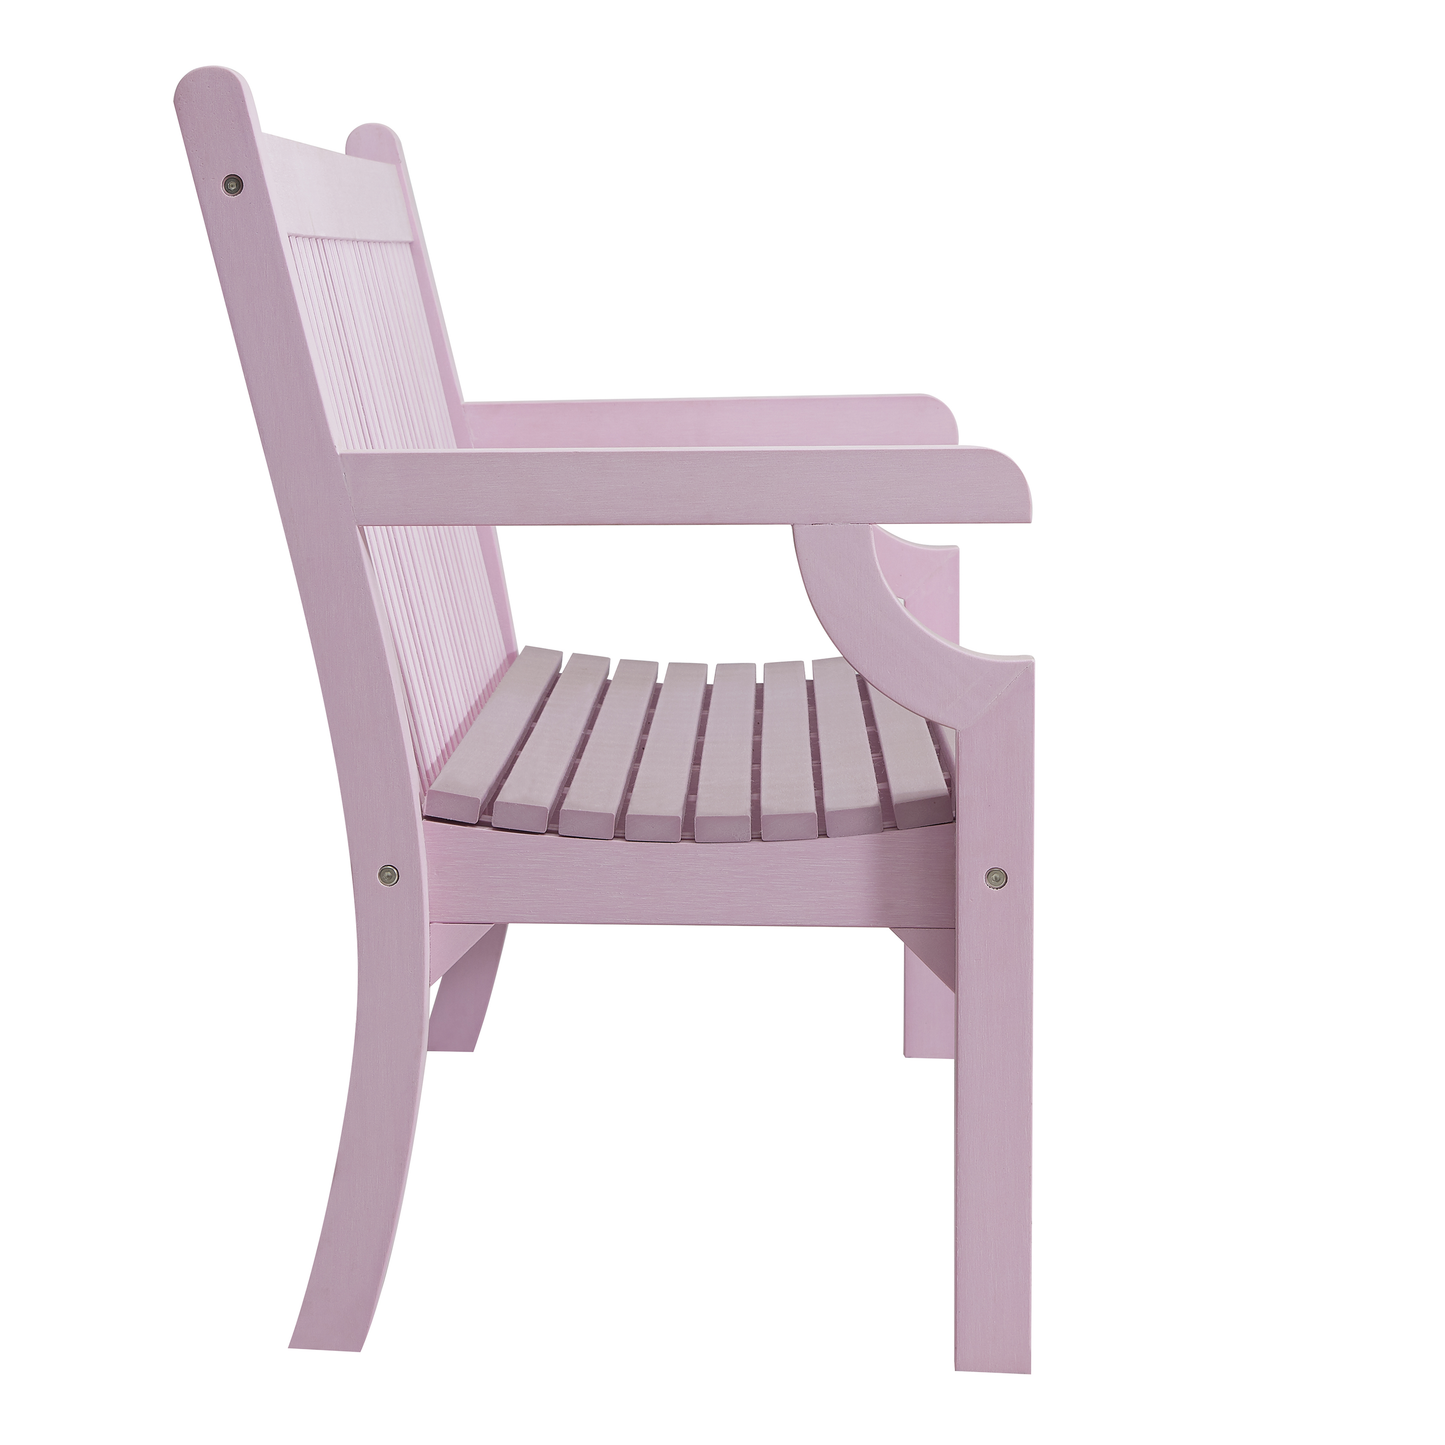 Winawood Sandwick 3 Seater Wood Effect Bench - Petal Lilac